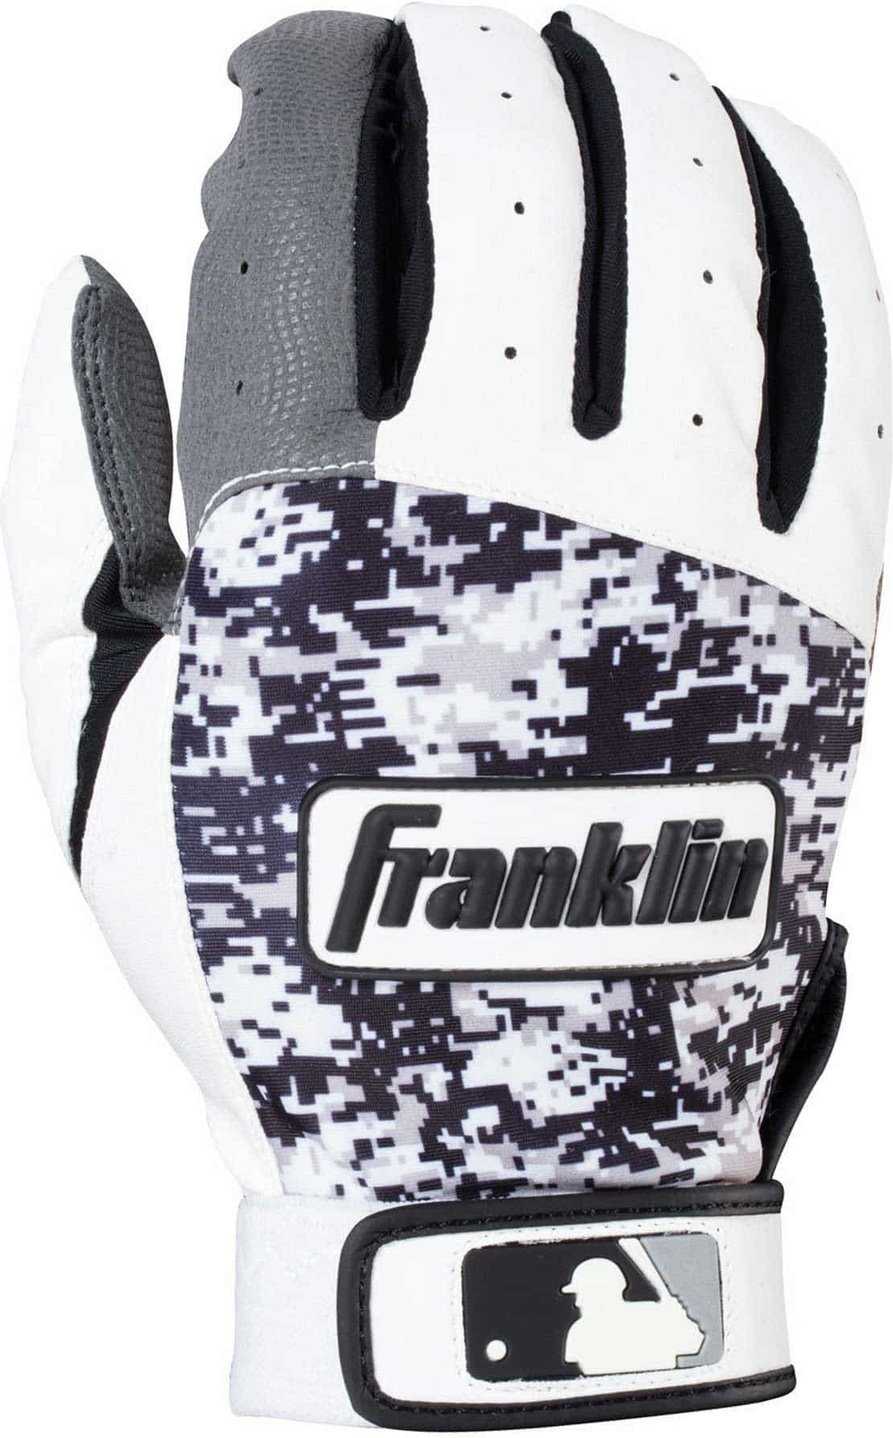 Franklin Digitek Youth Batting Gloves - White Black Camo - HIT a Double